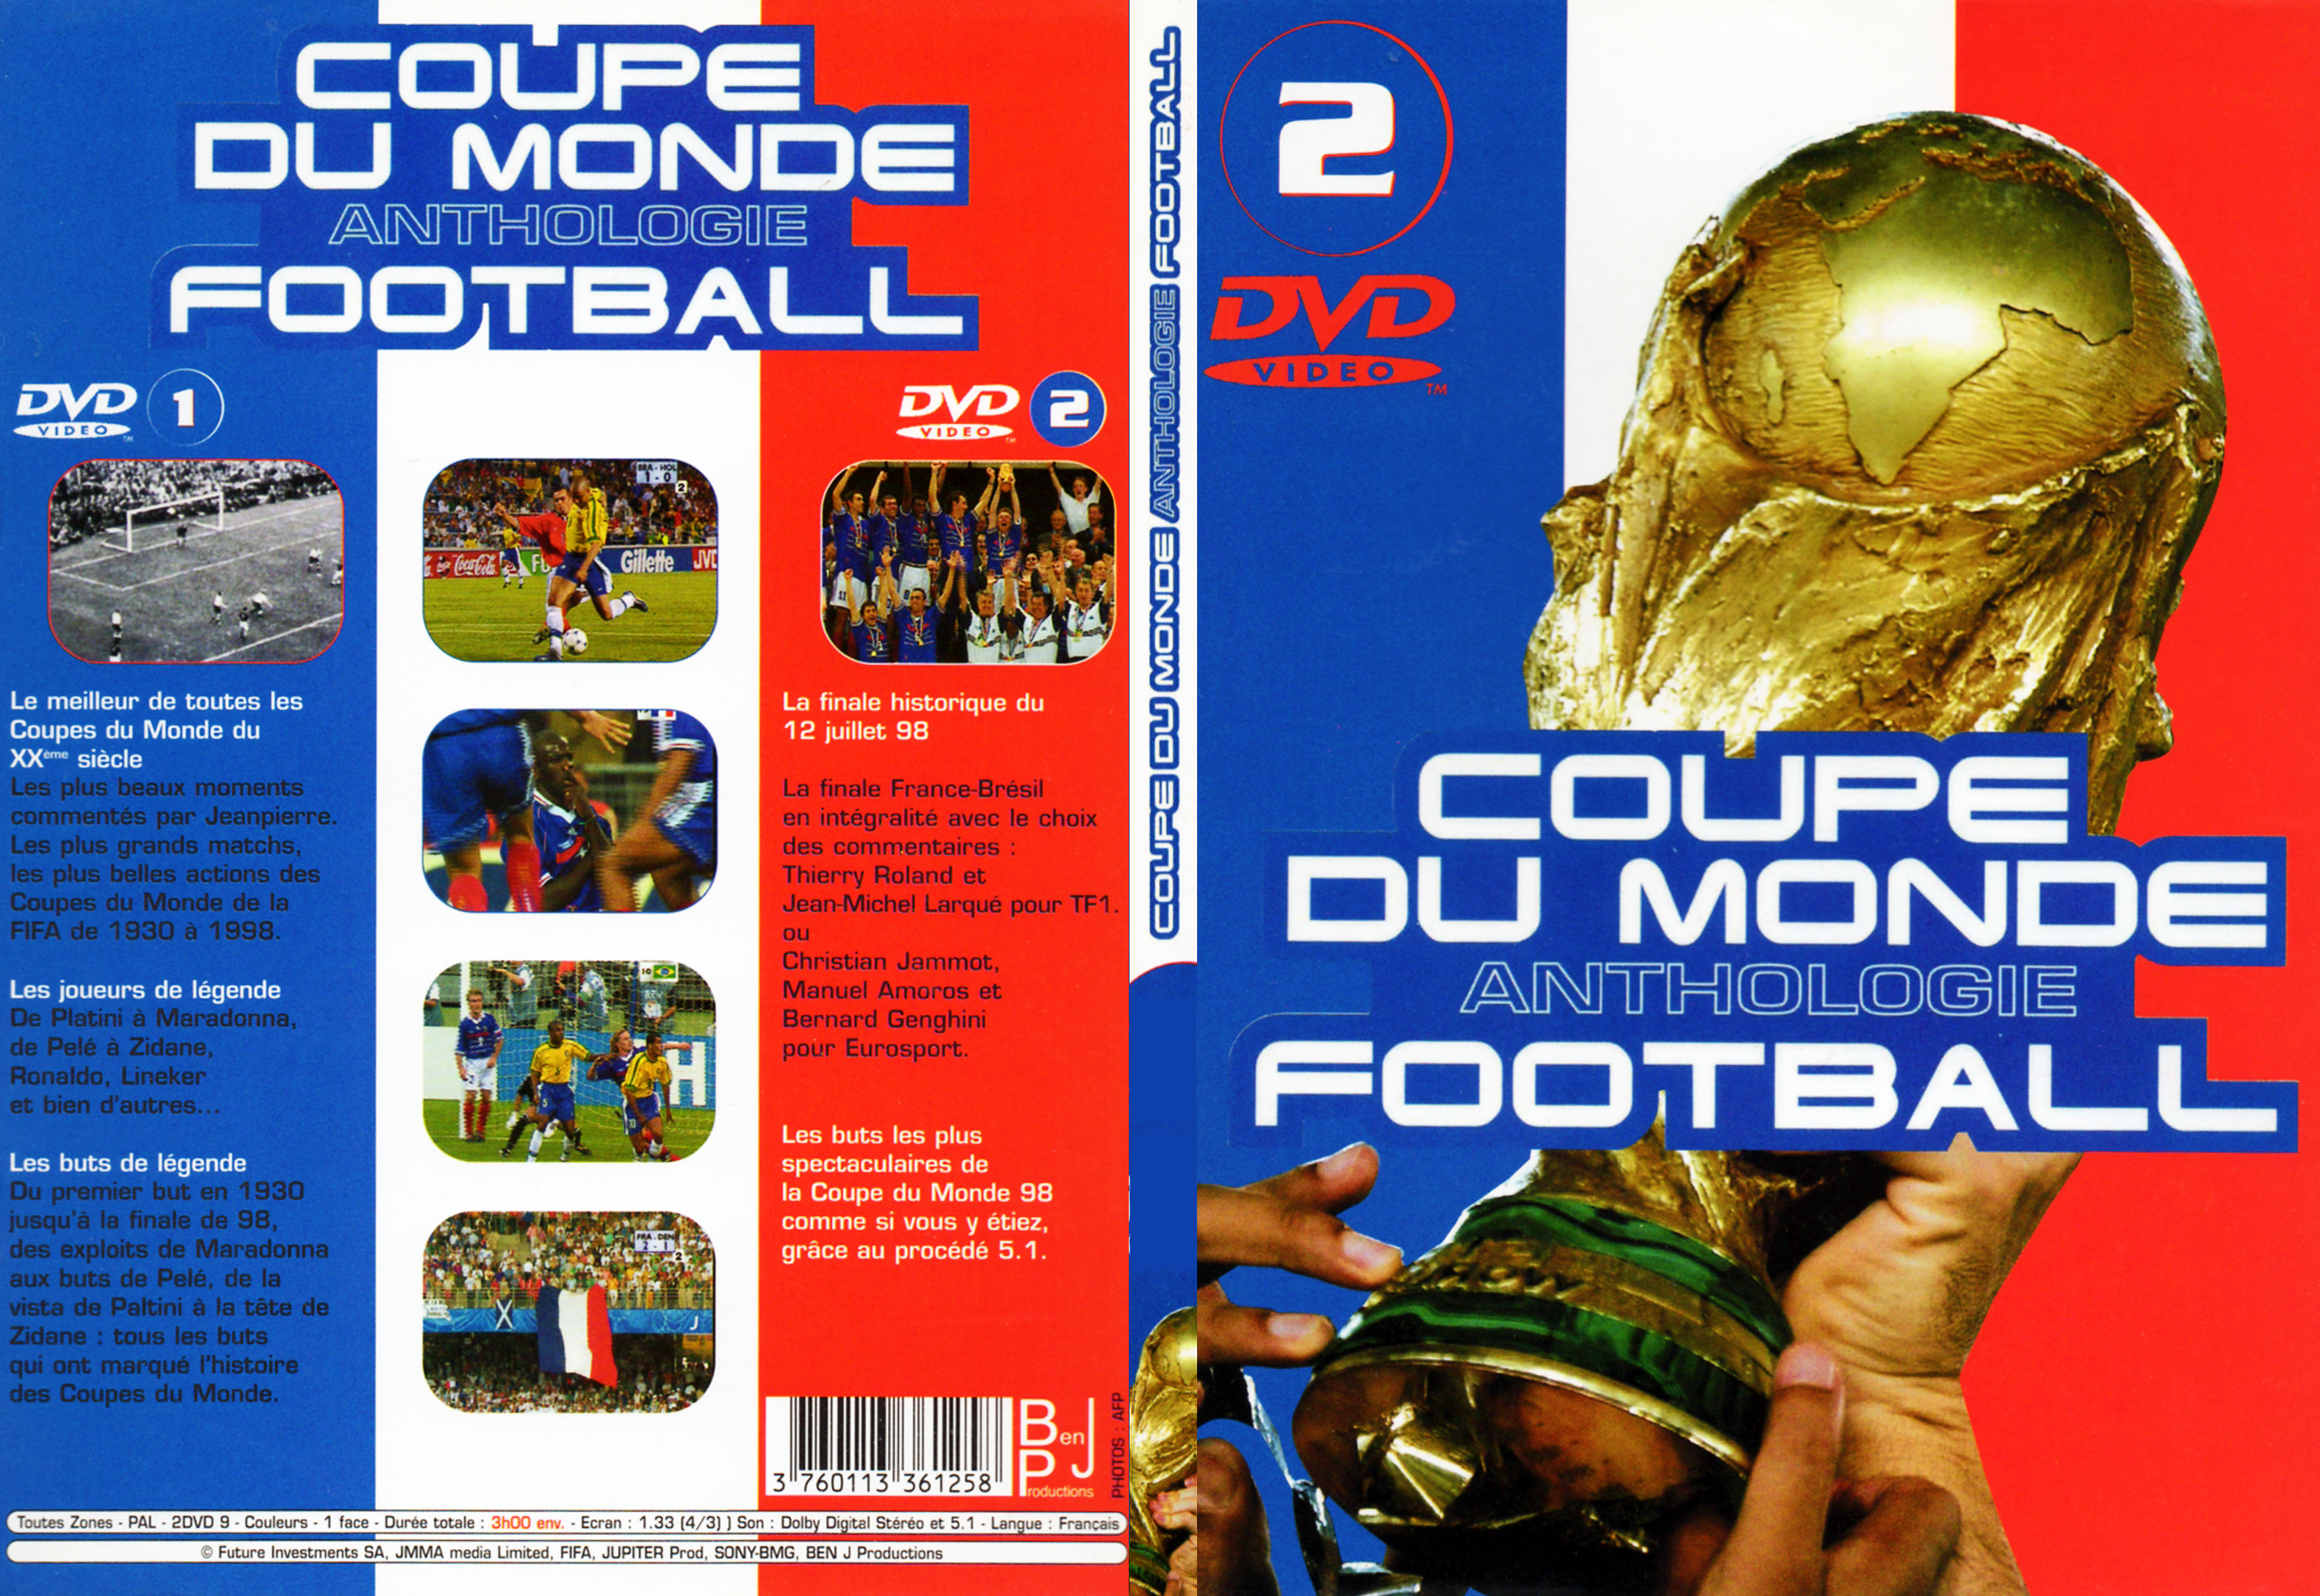 Jaquette DVD Coupe du monde Anthologie Football - SLIM